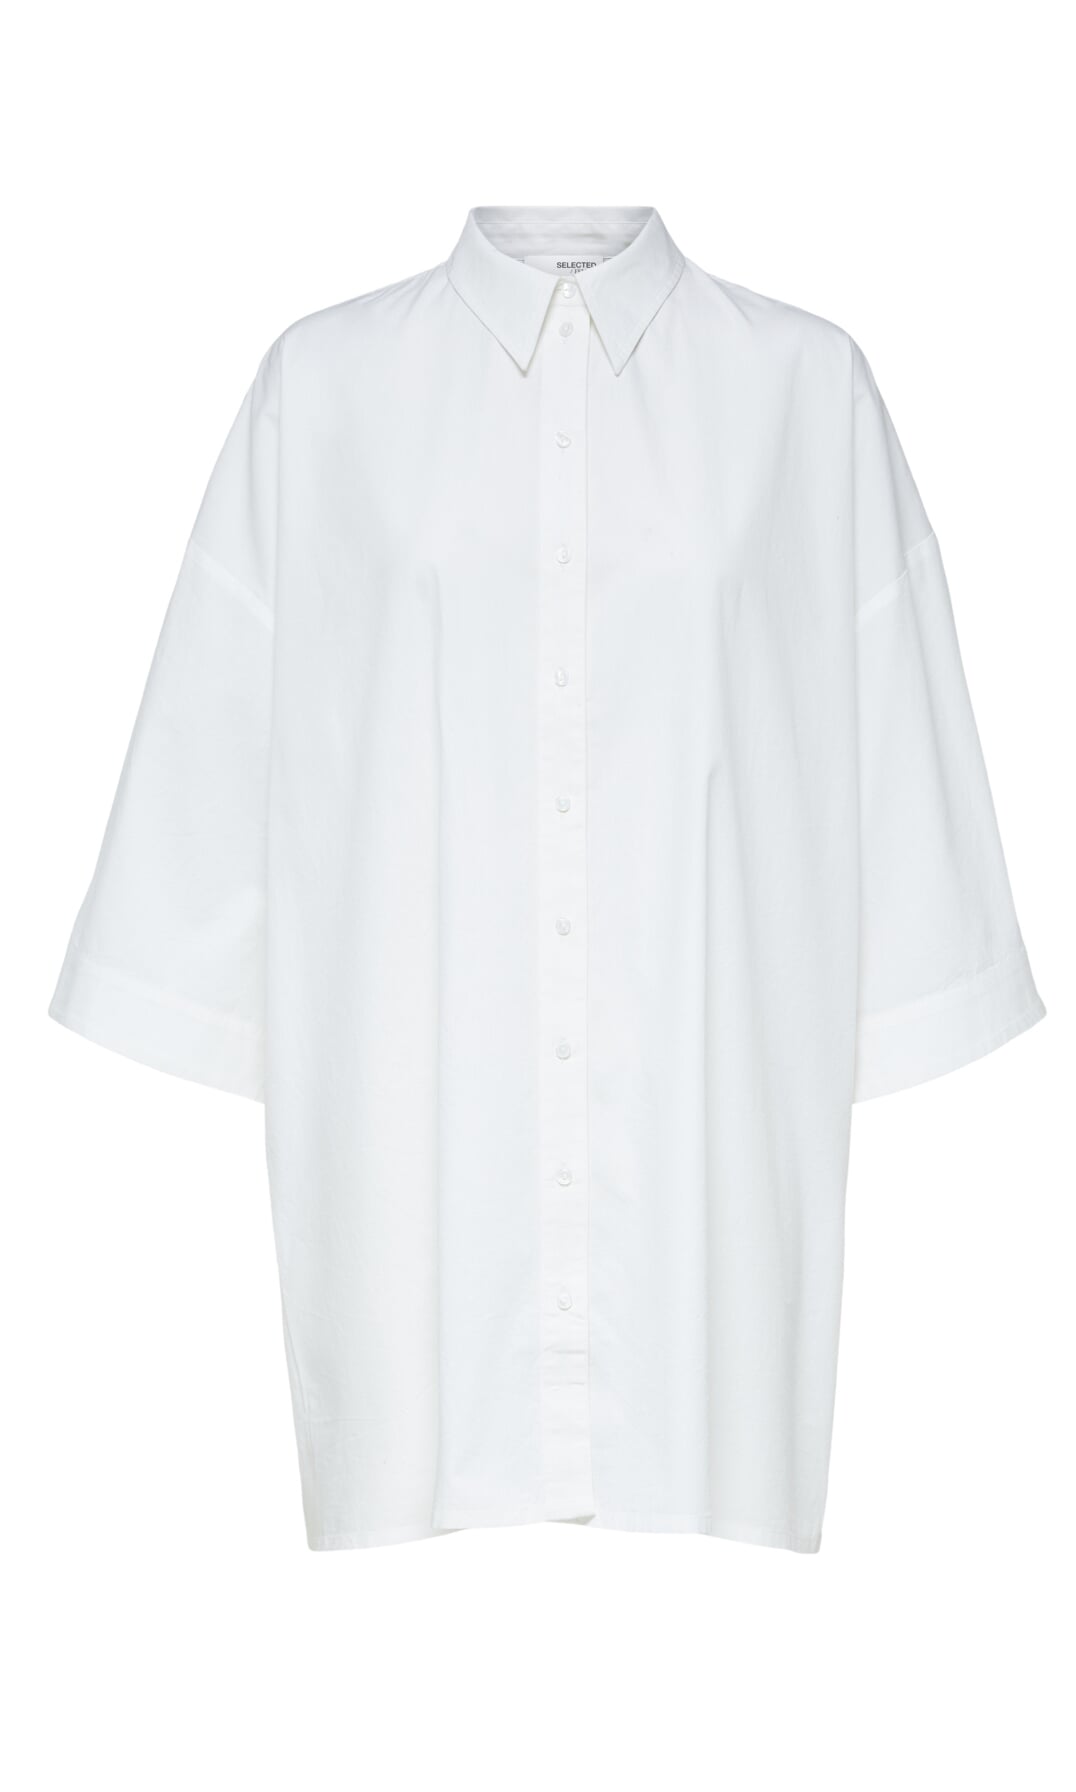 Oxford shirt - Plümo Ltd